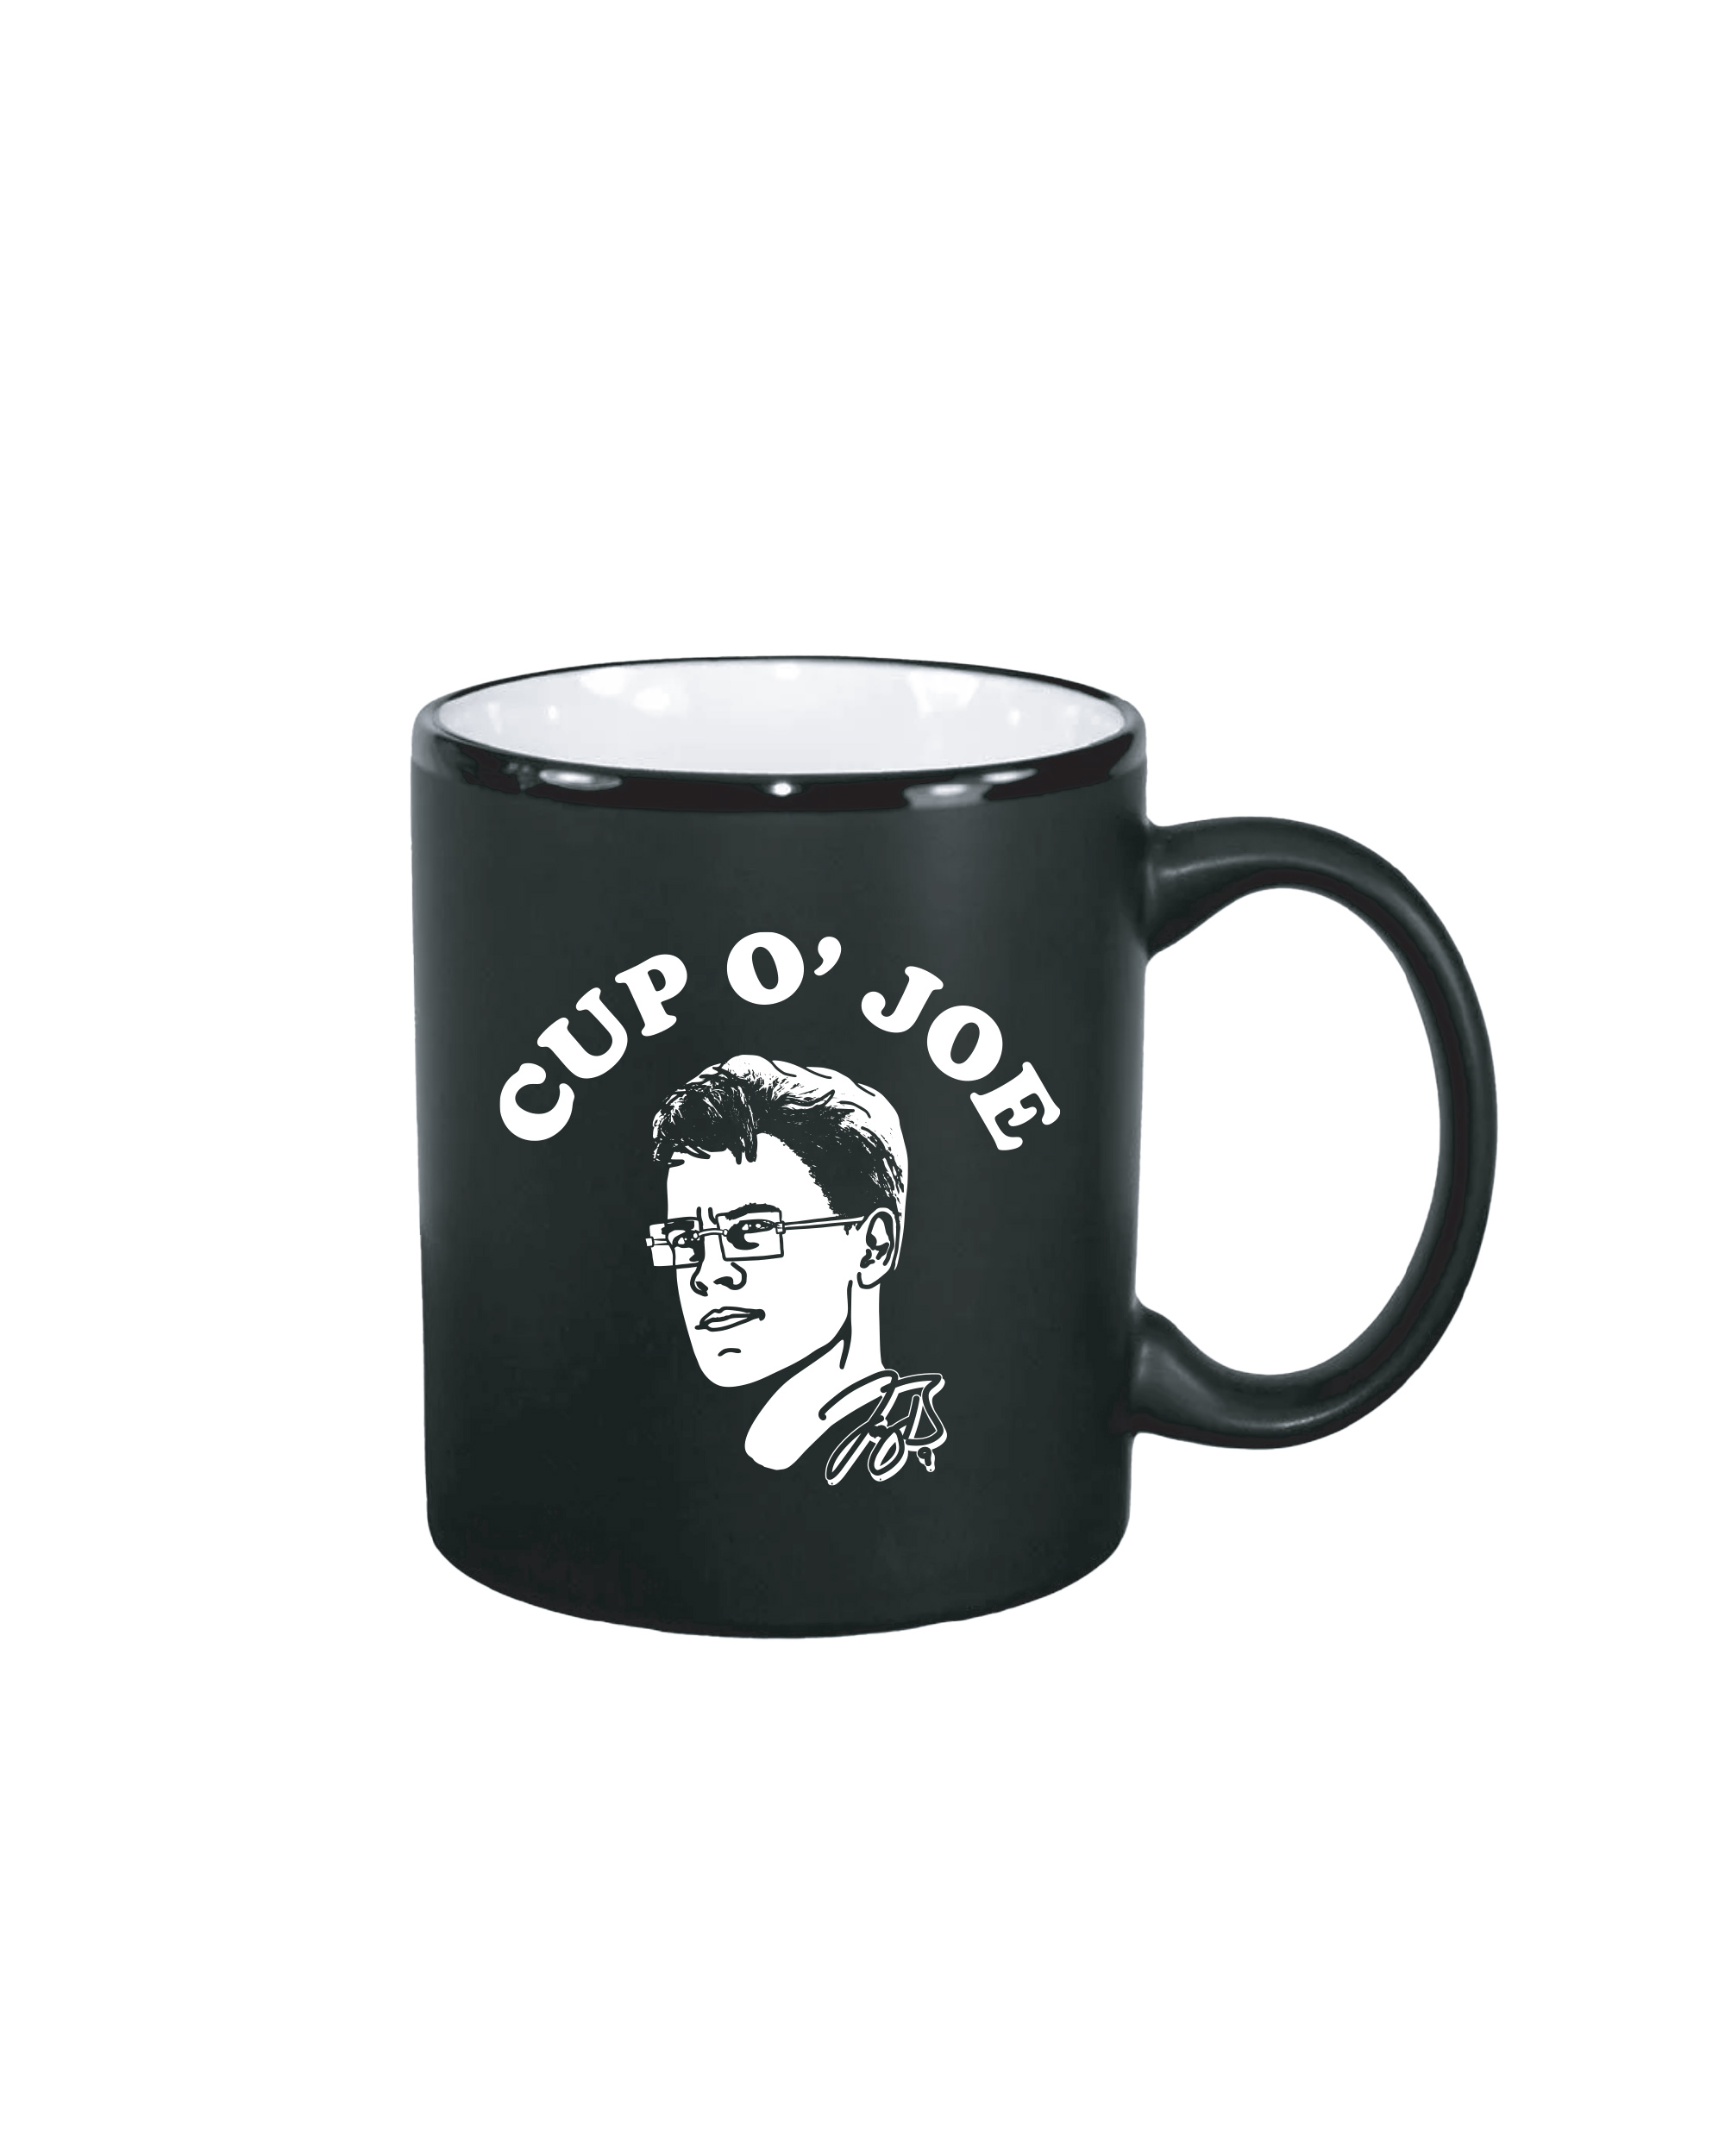 Cup O’ Joe Mug